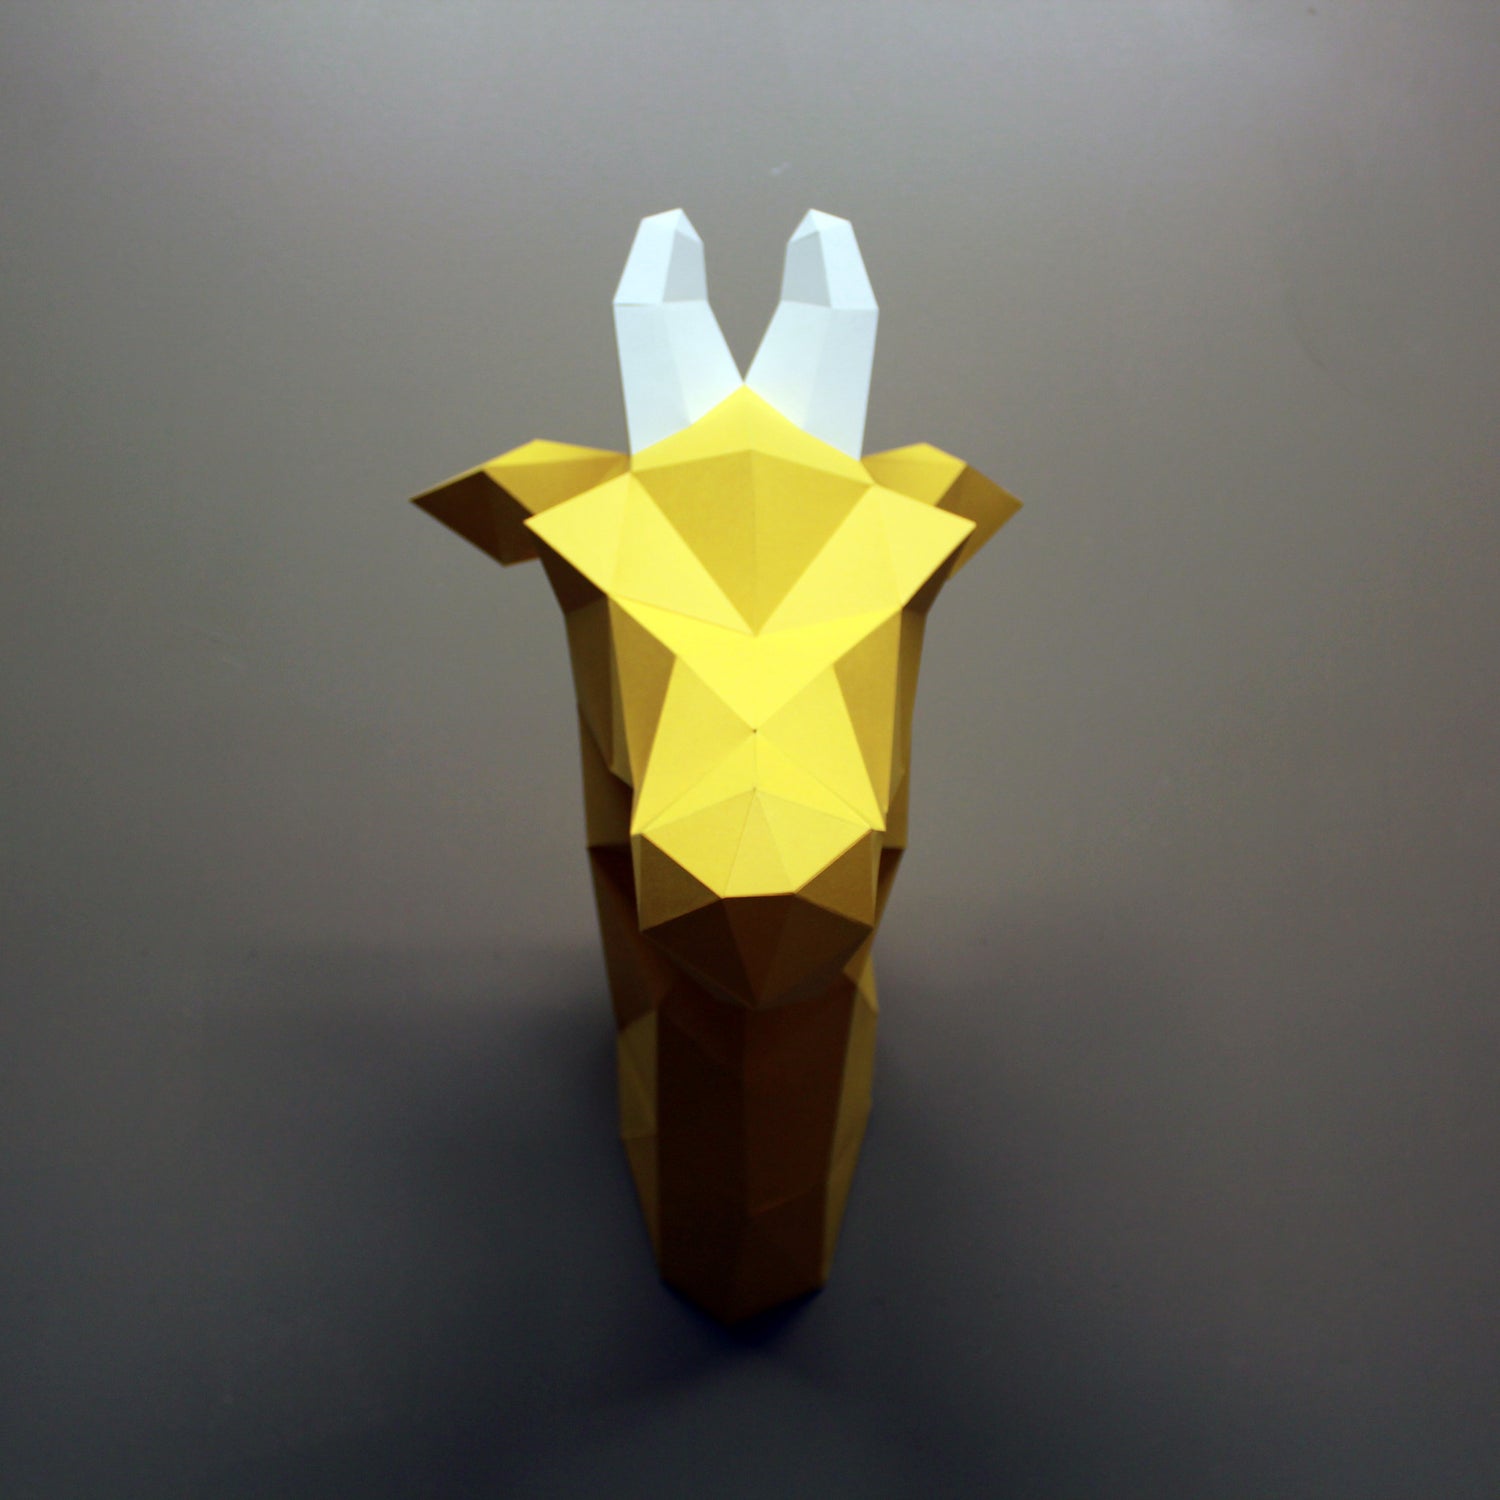 Vera the Unicorn  DIY Paper Craft Animal Kit – Resident